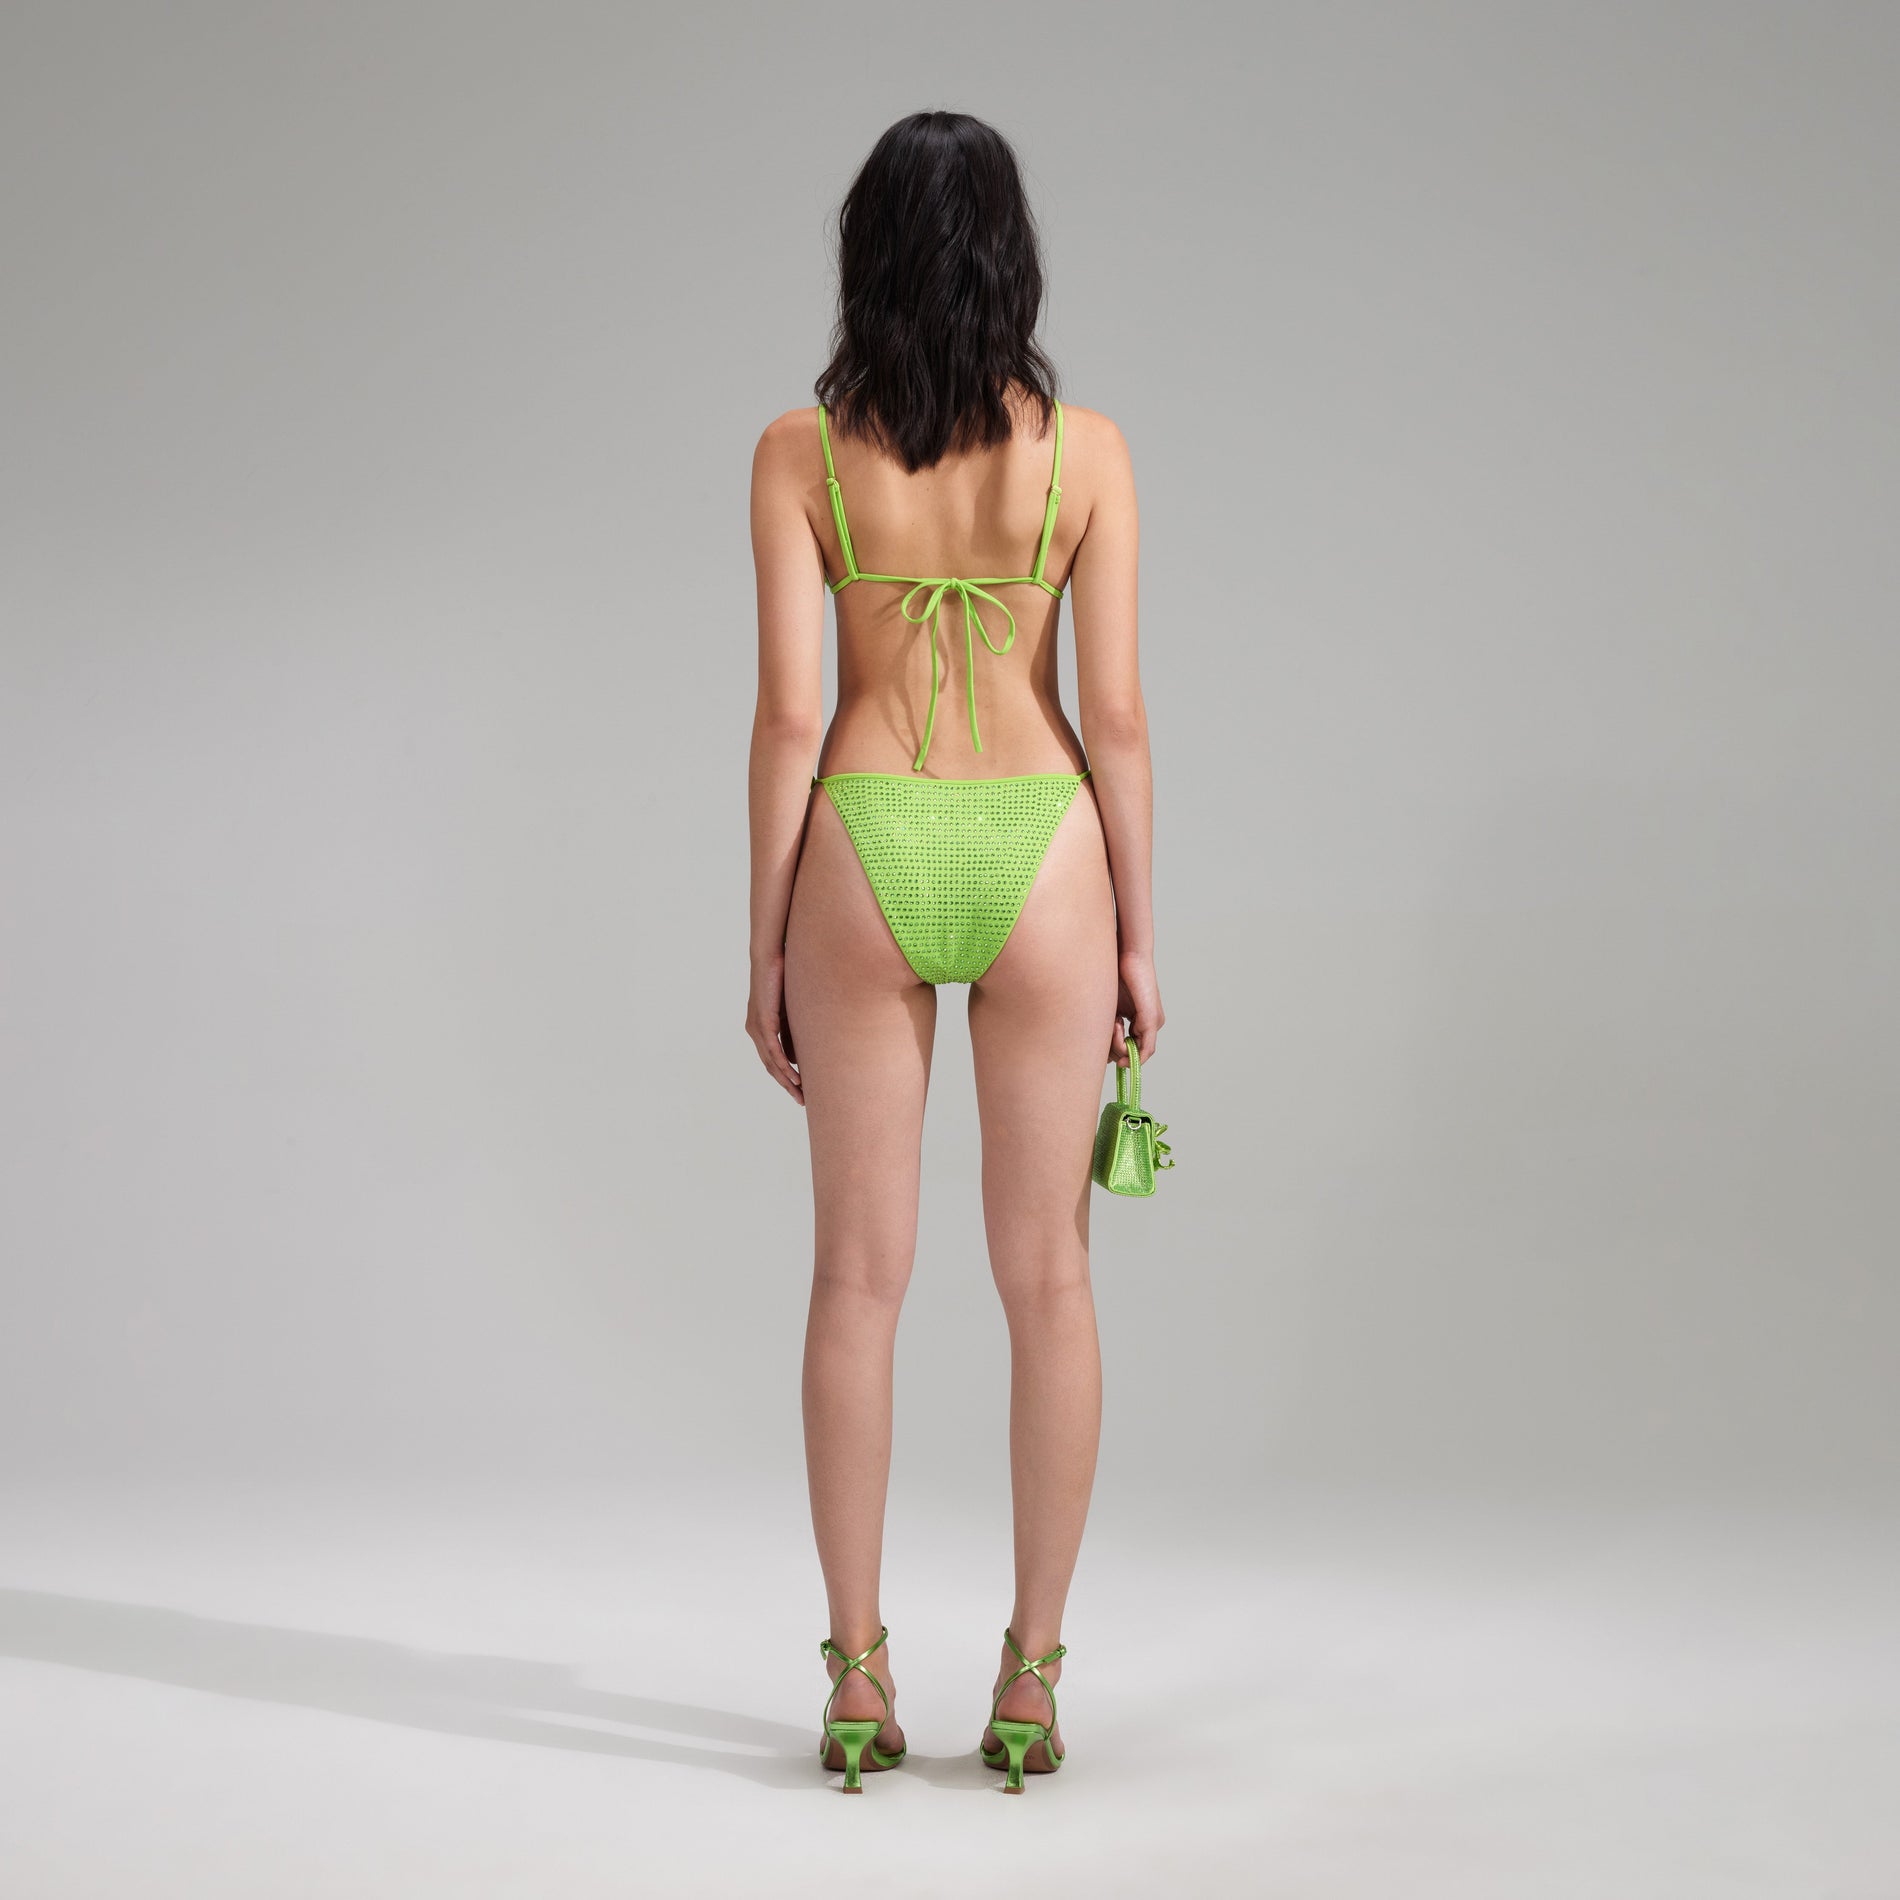 A woman wearing the Green Rhinestone Brazilian Bikini Briefs